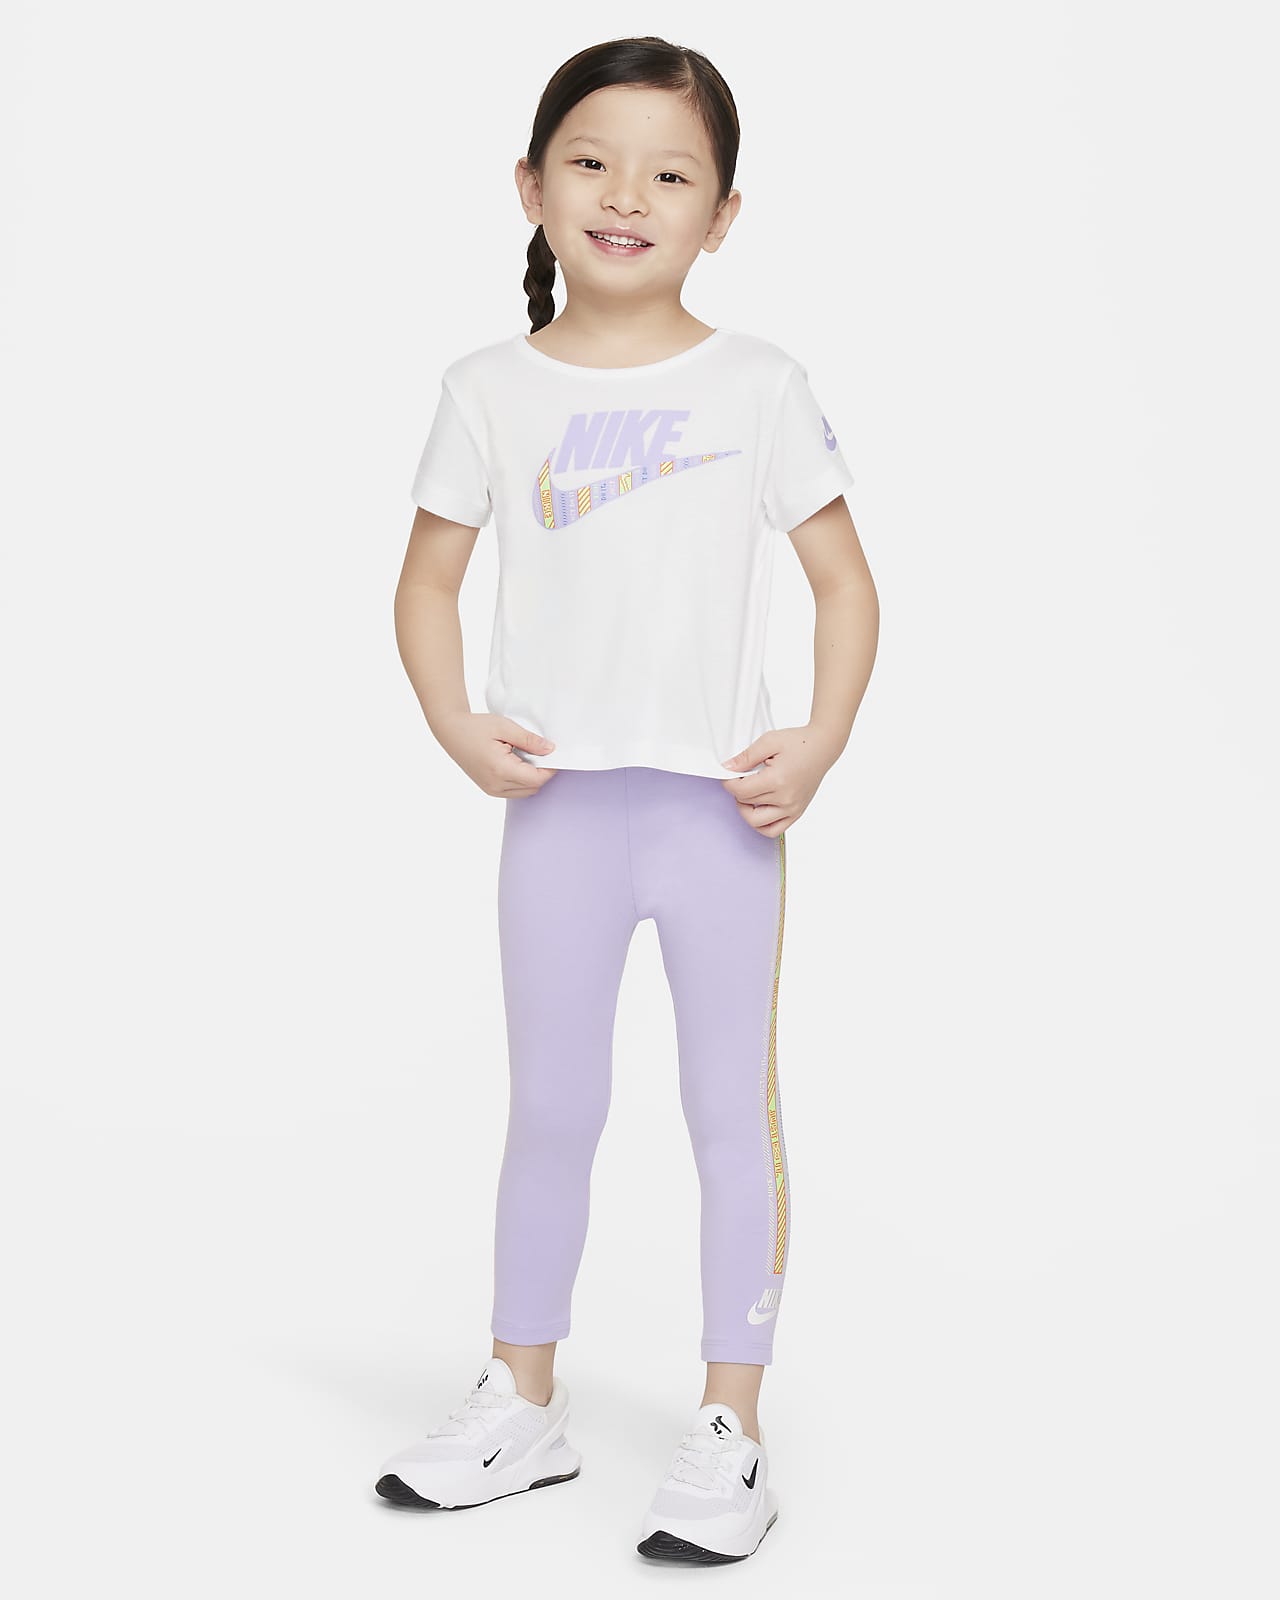 Nike Happy Camper Toddler Leggings Set